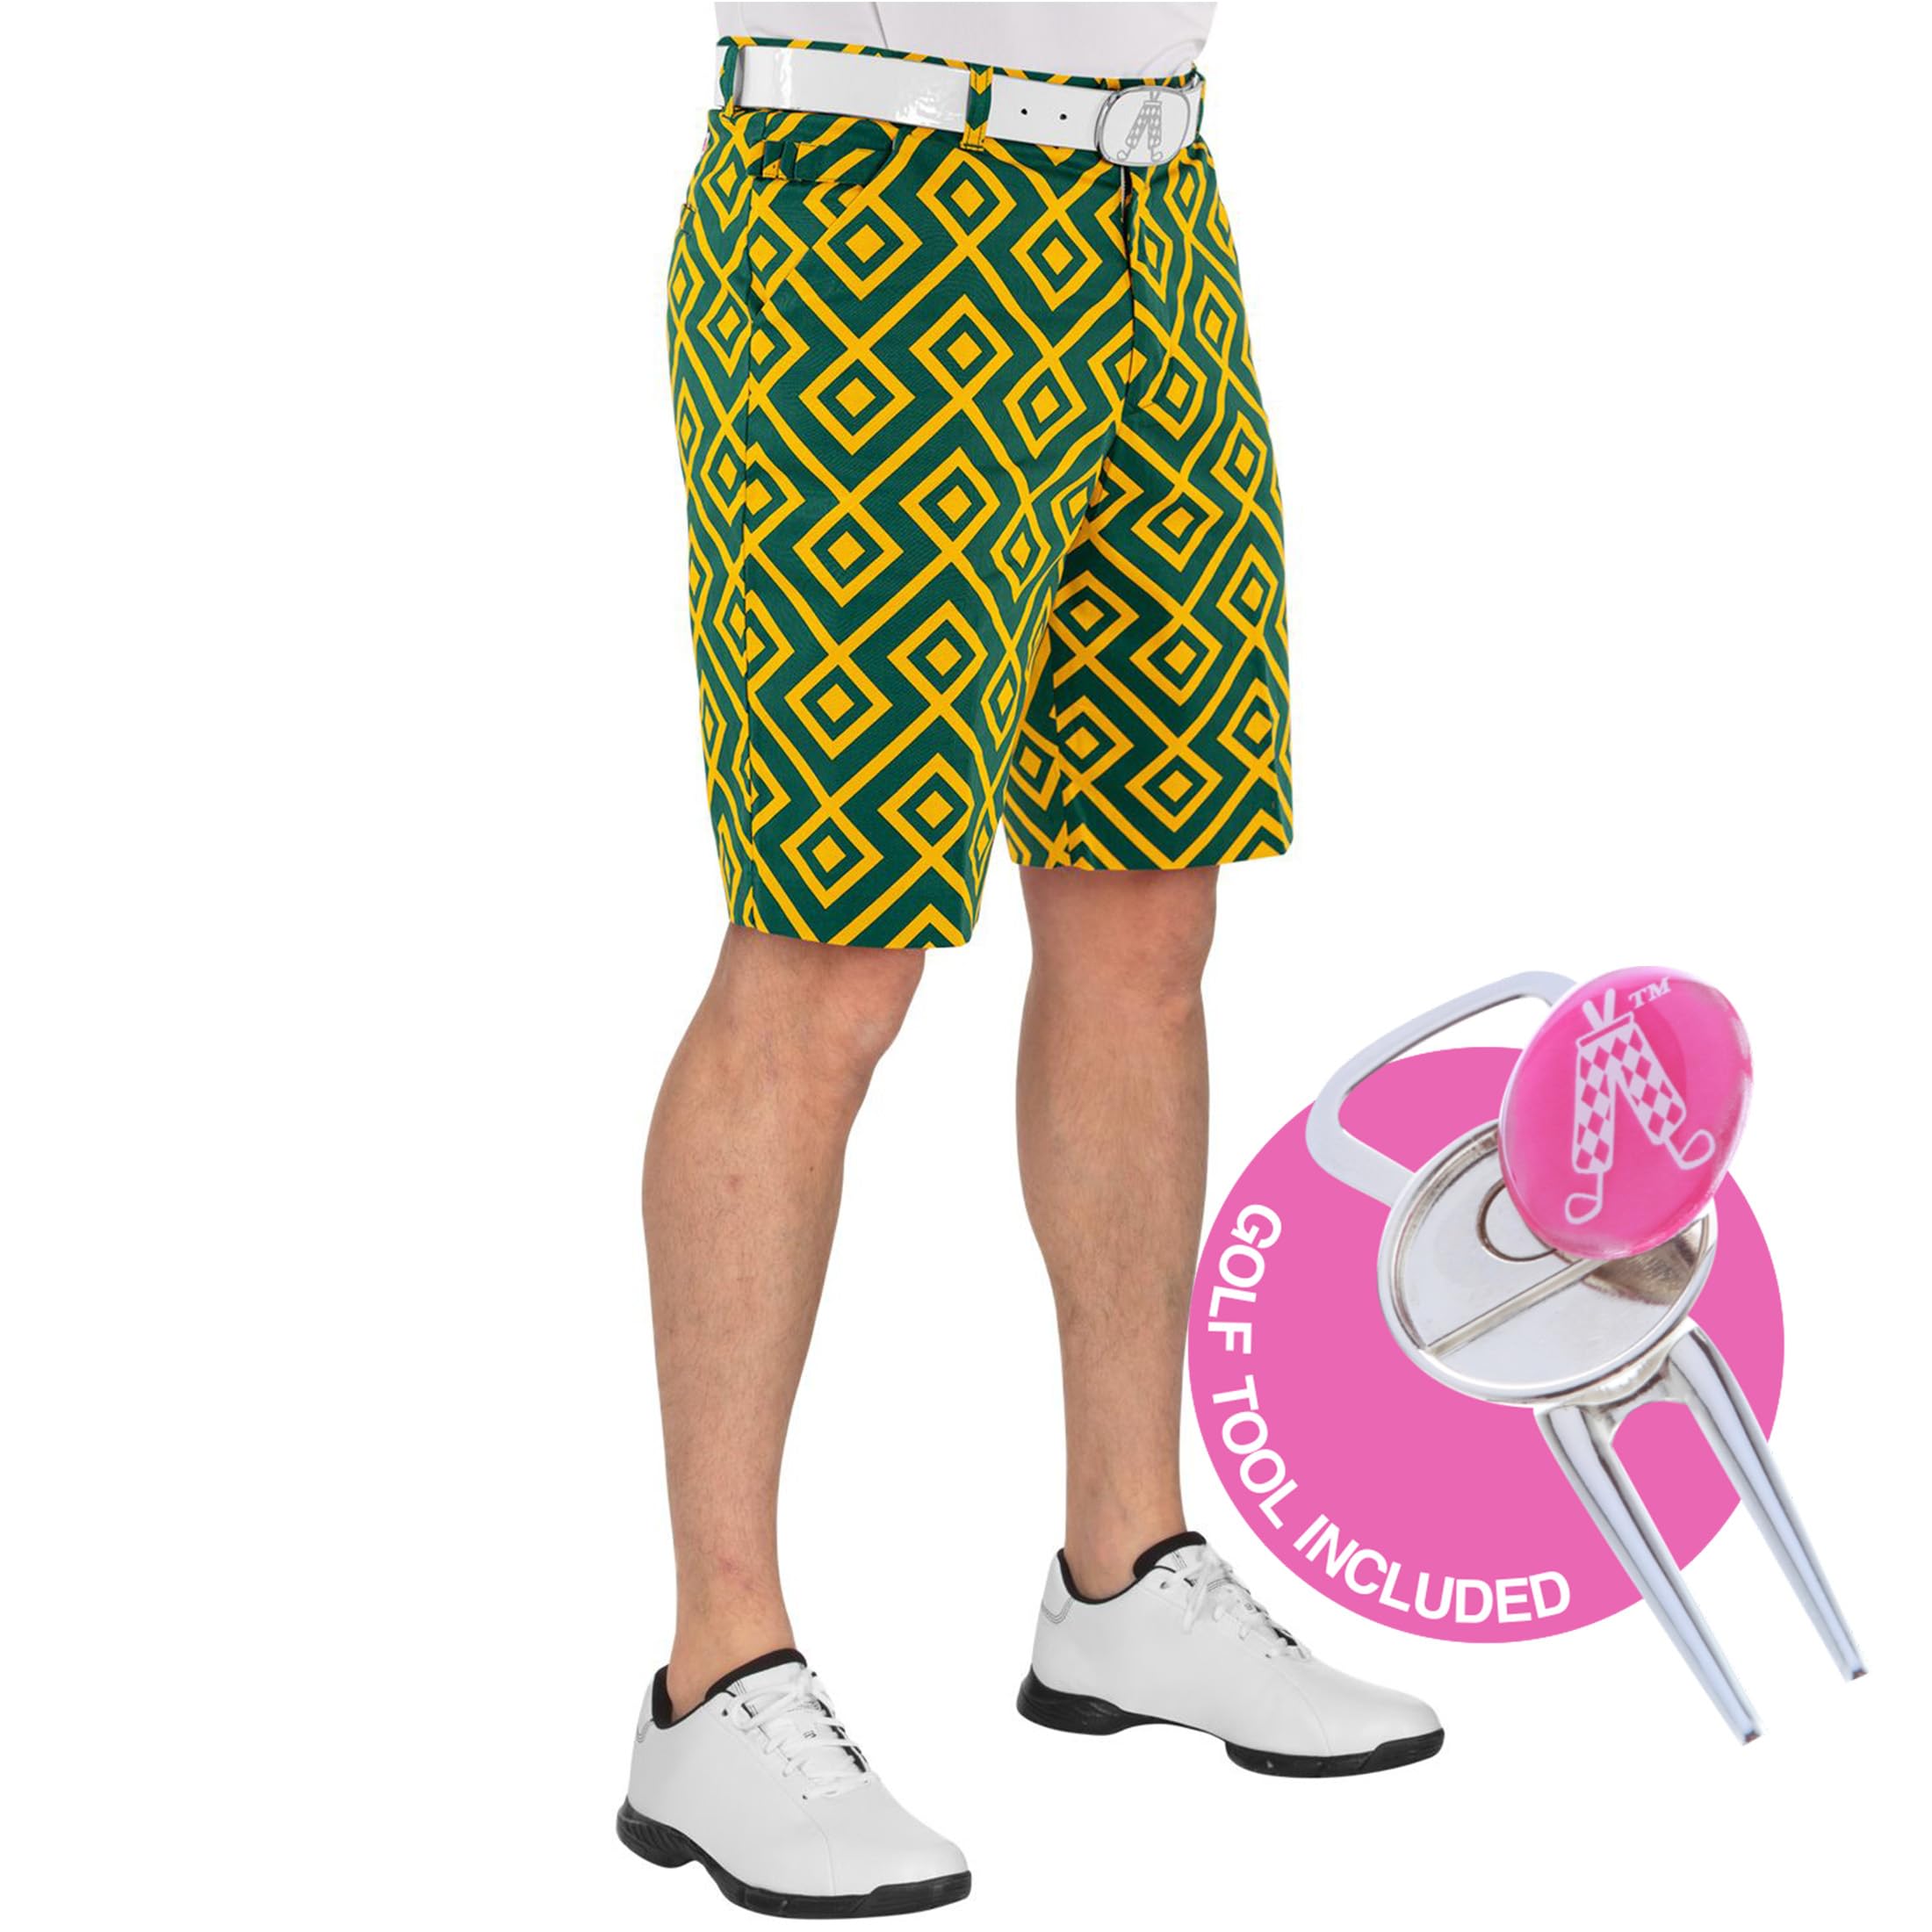 Royal & Awesome Golfshorts für Herren, Golf-Shorts, lustige Golfshorts für Herren, Kleider-Shorts, maßgeschneiderte Herren-Shorts, Amazeballs, 54